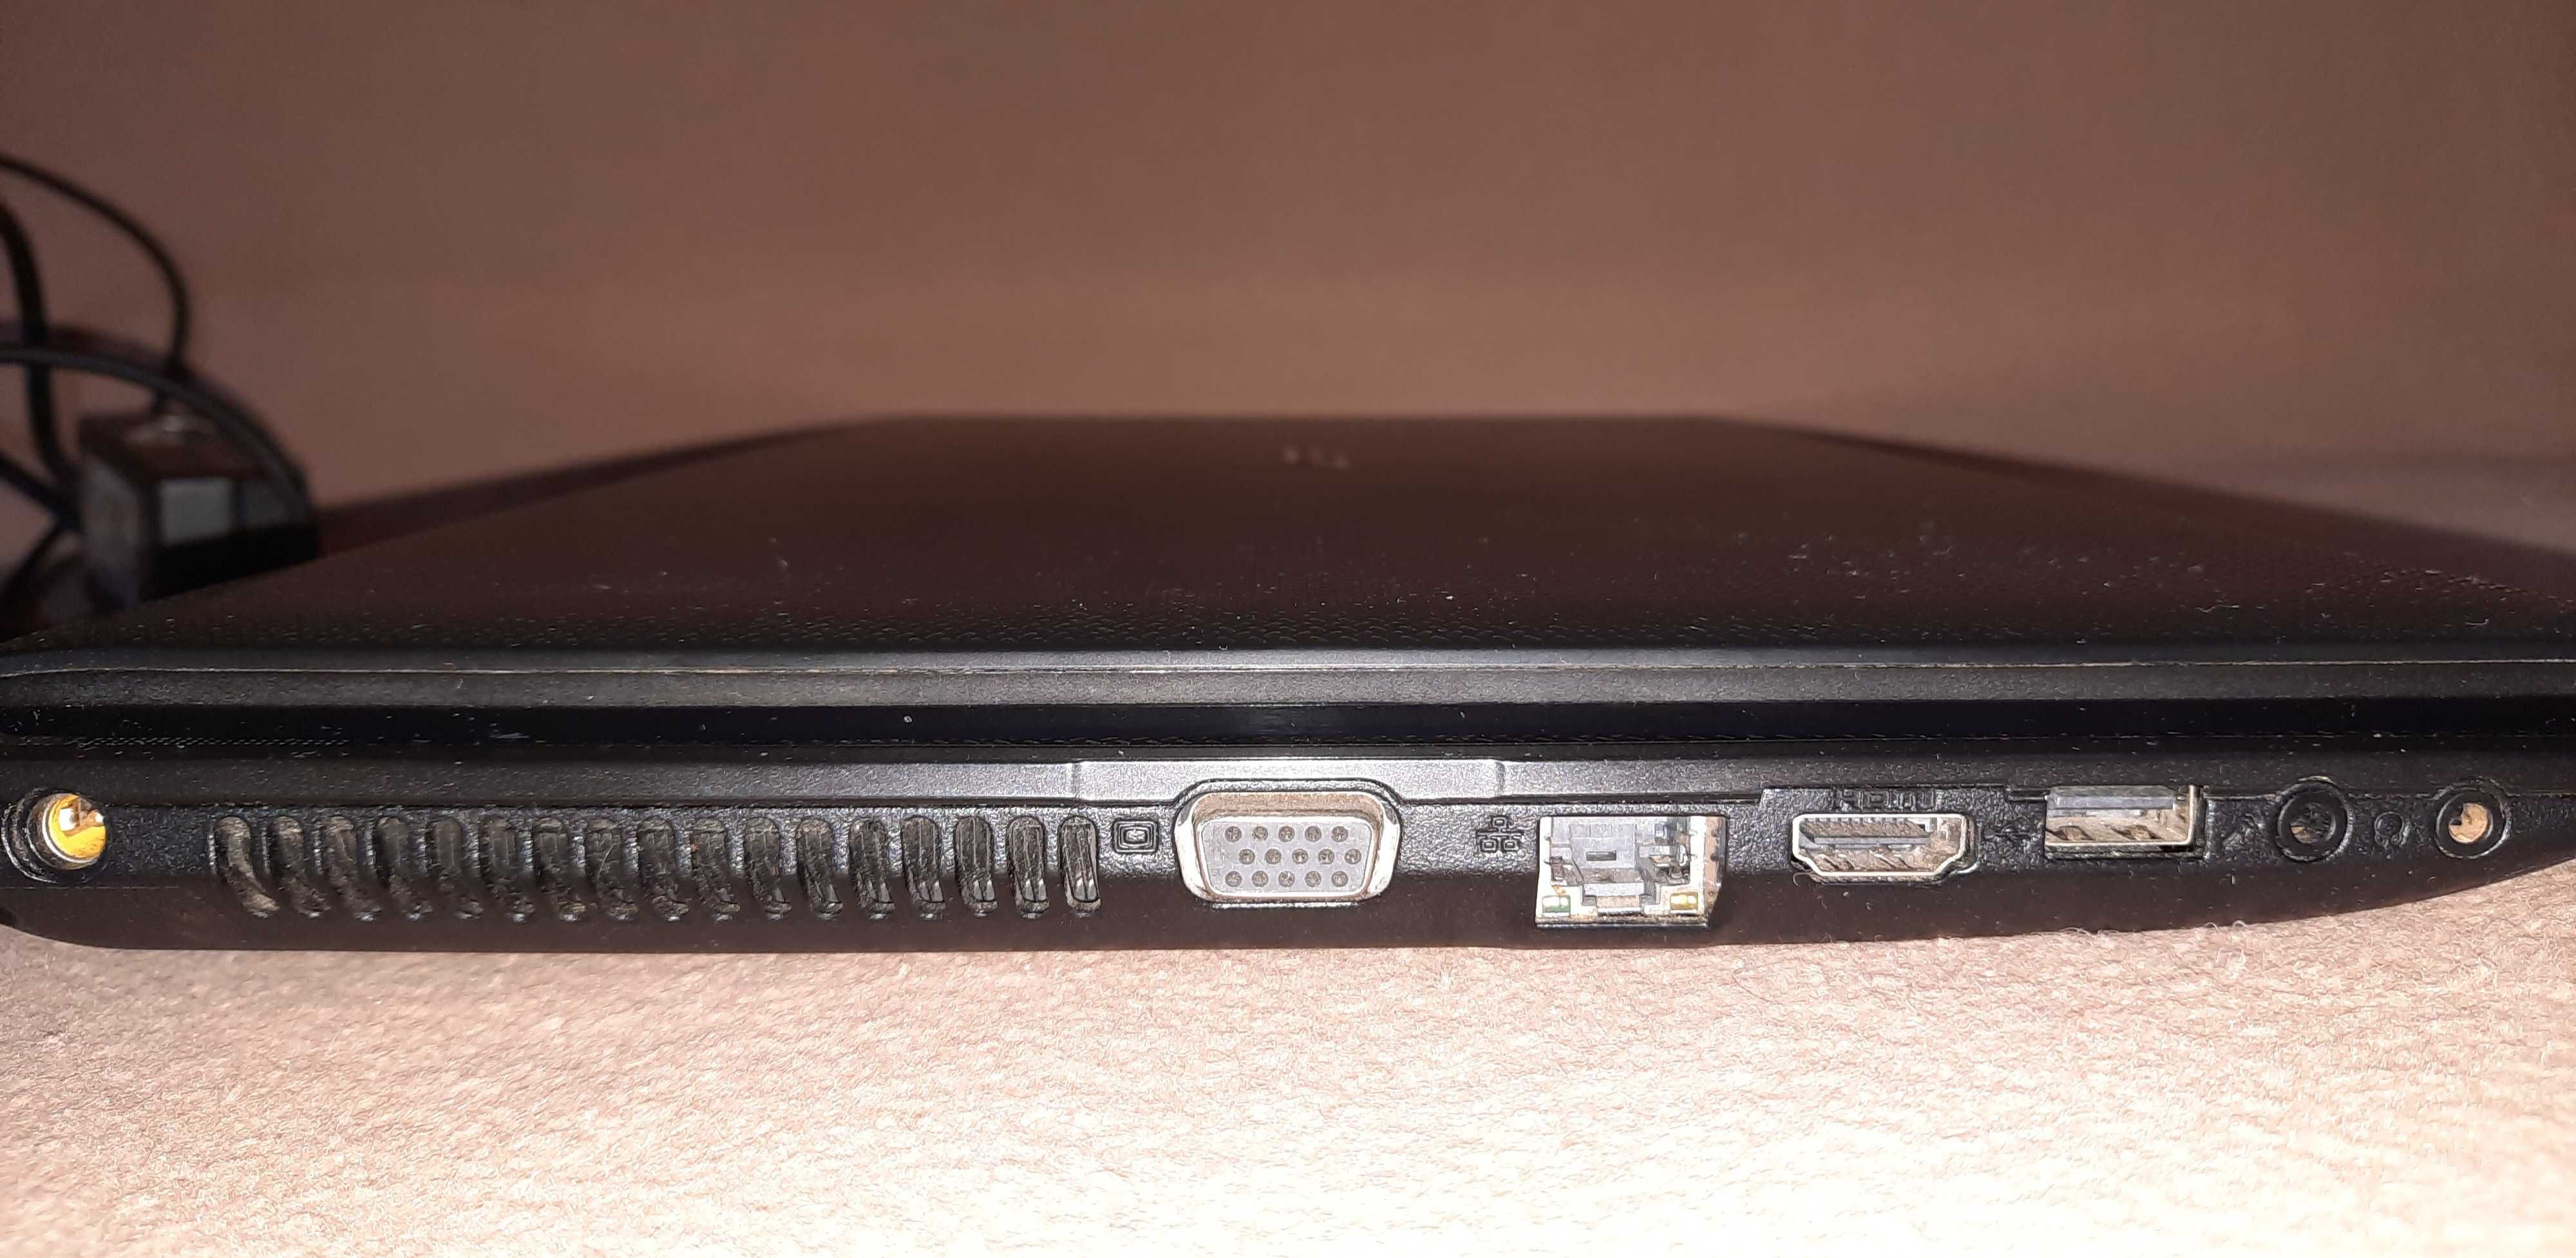 Laptop Acer 5742G